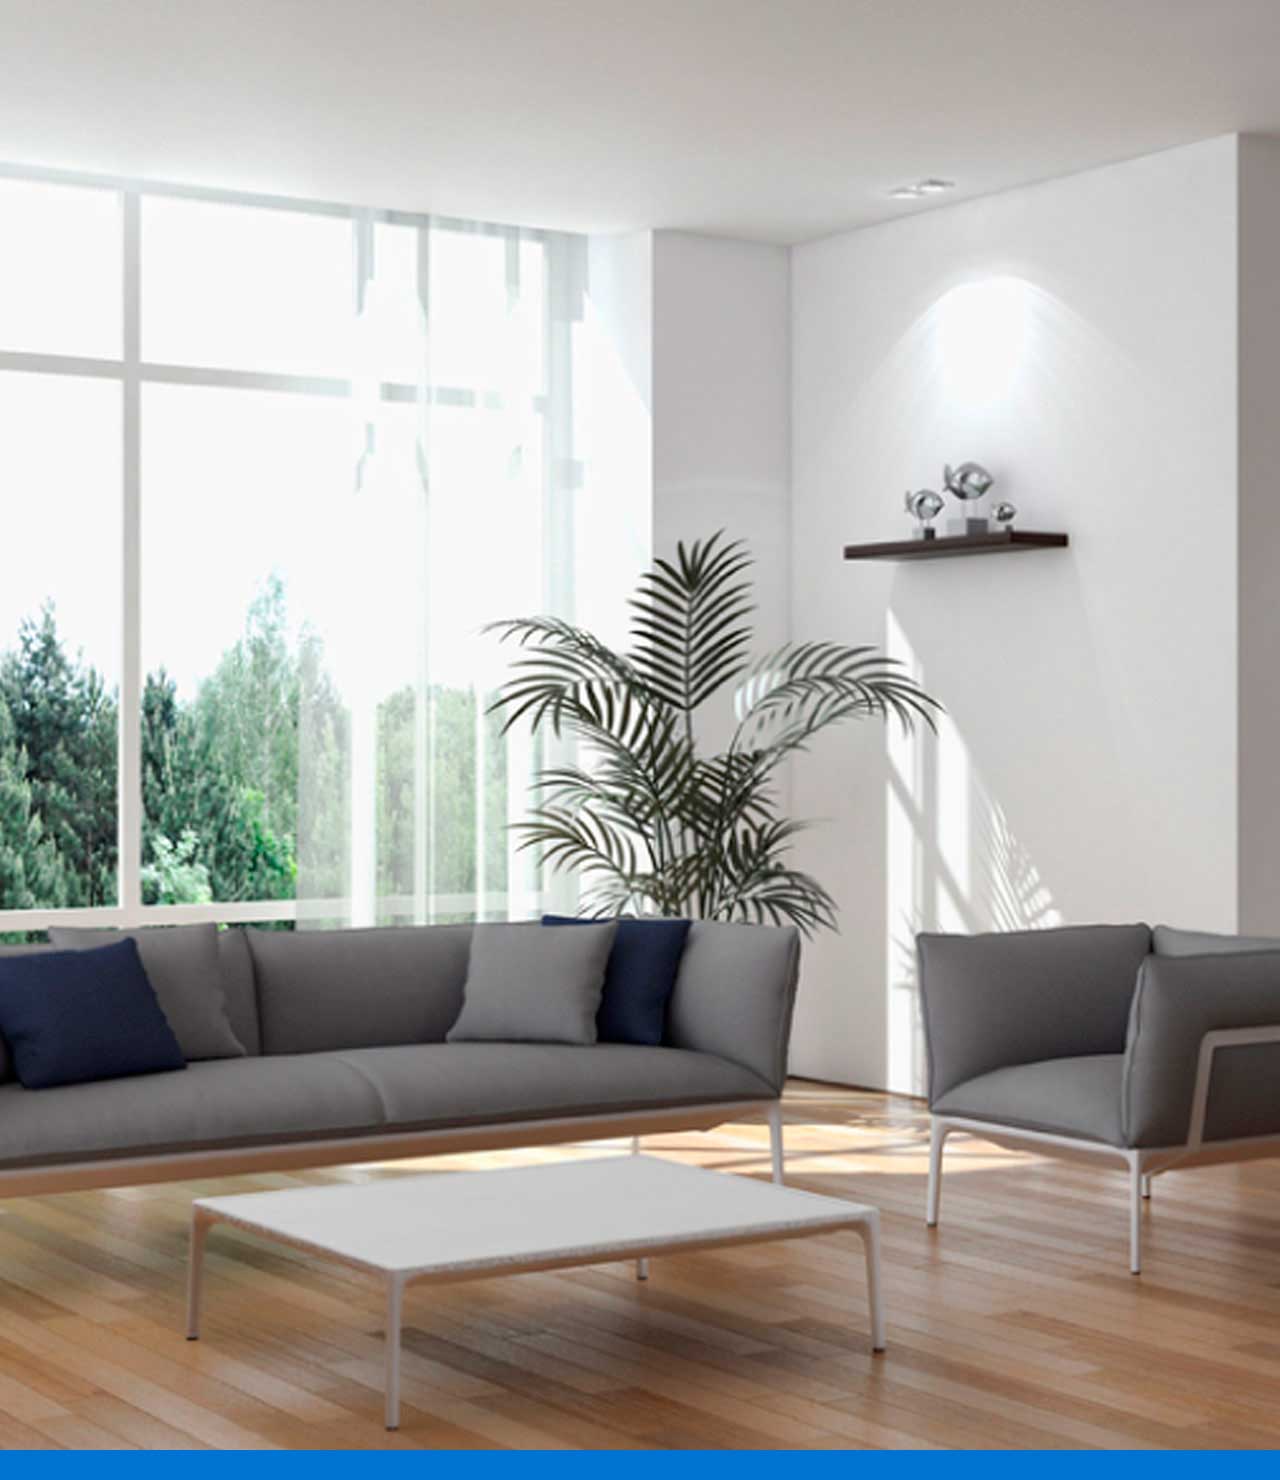 Diseño moderno interior sala de estar con panel de pared acolchado